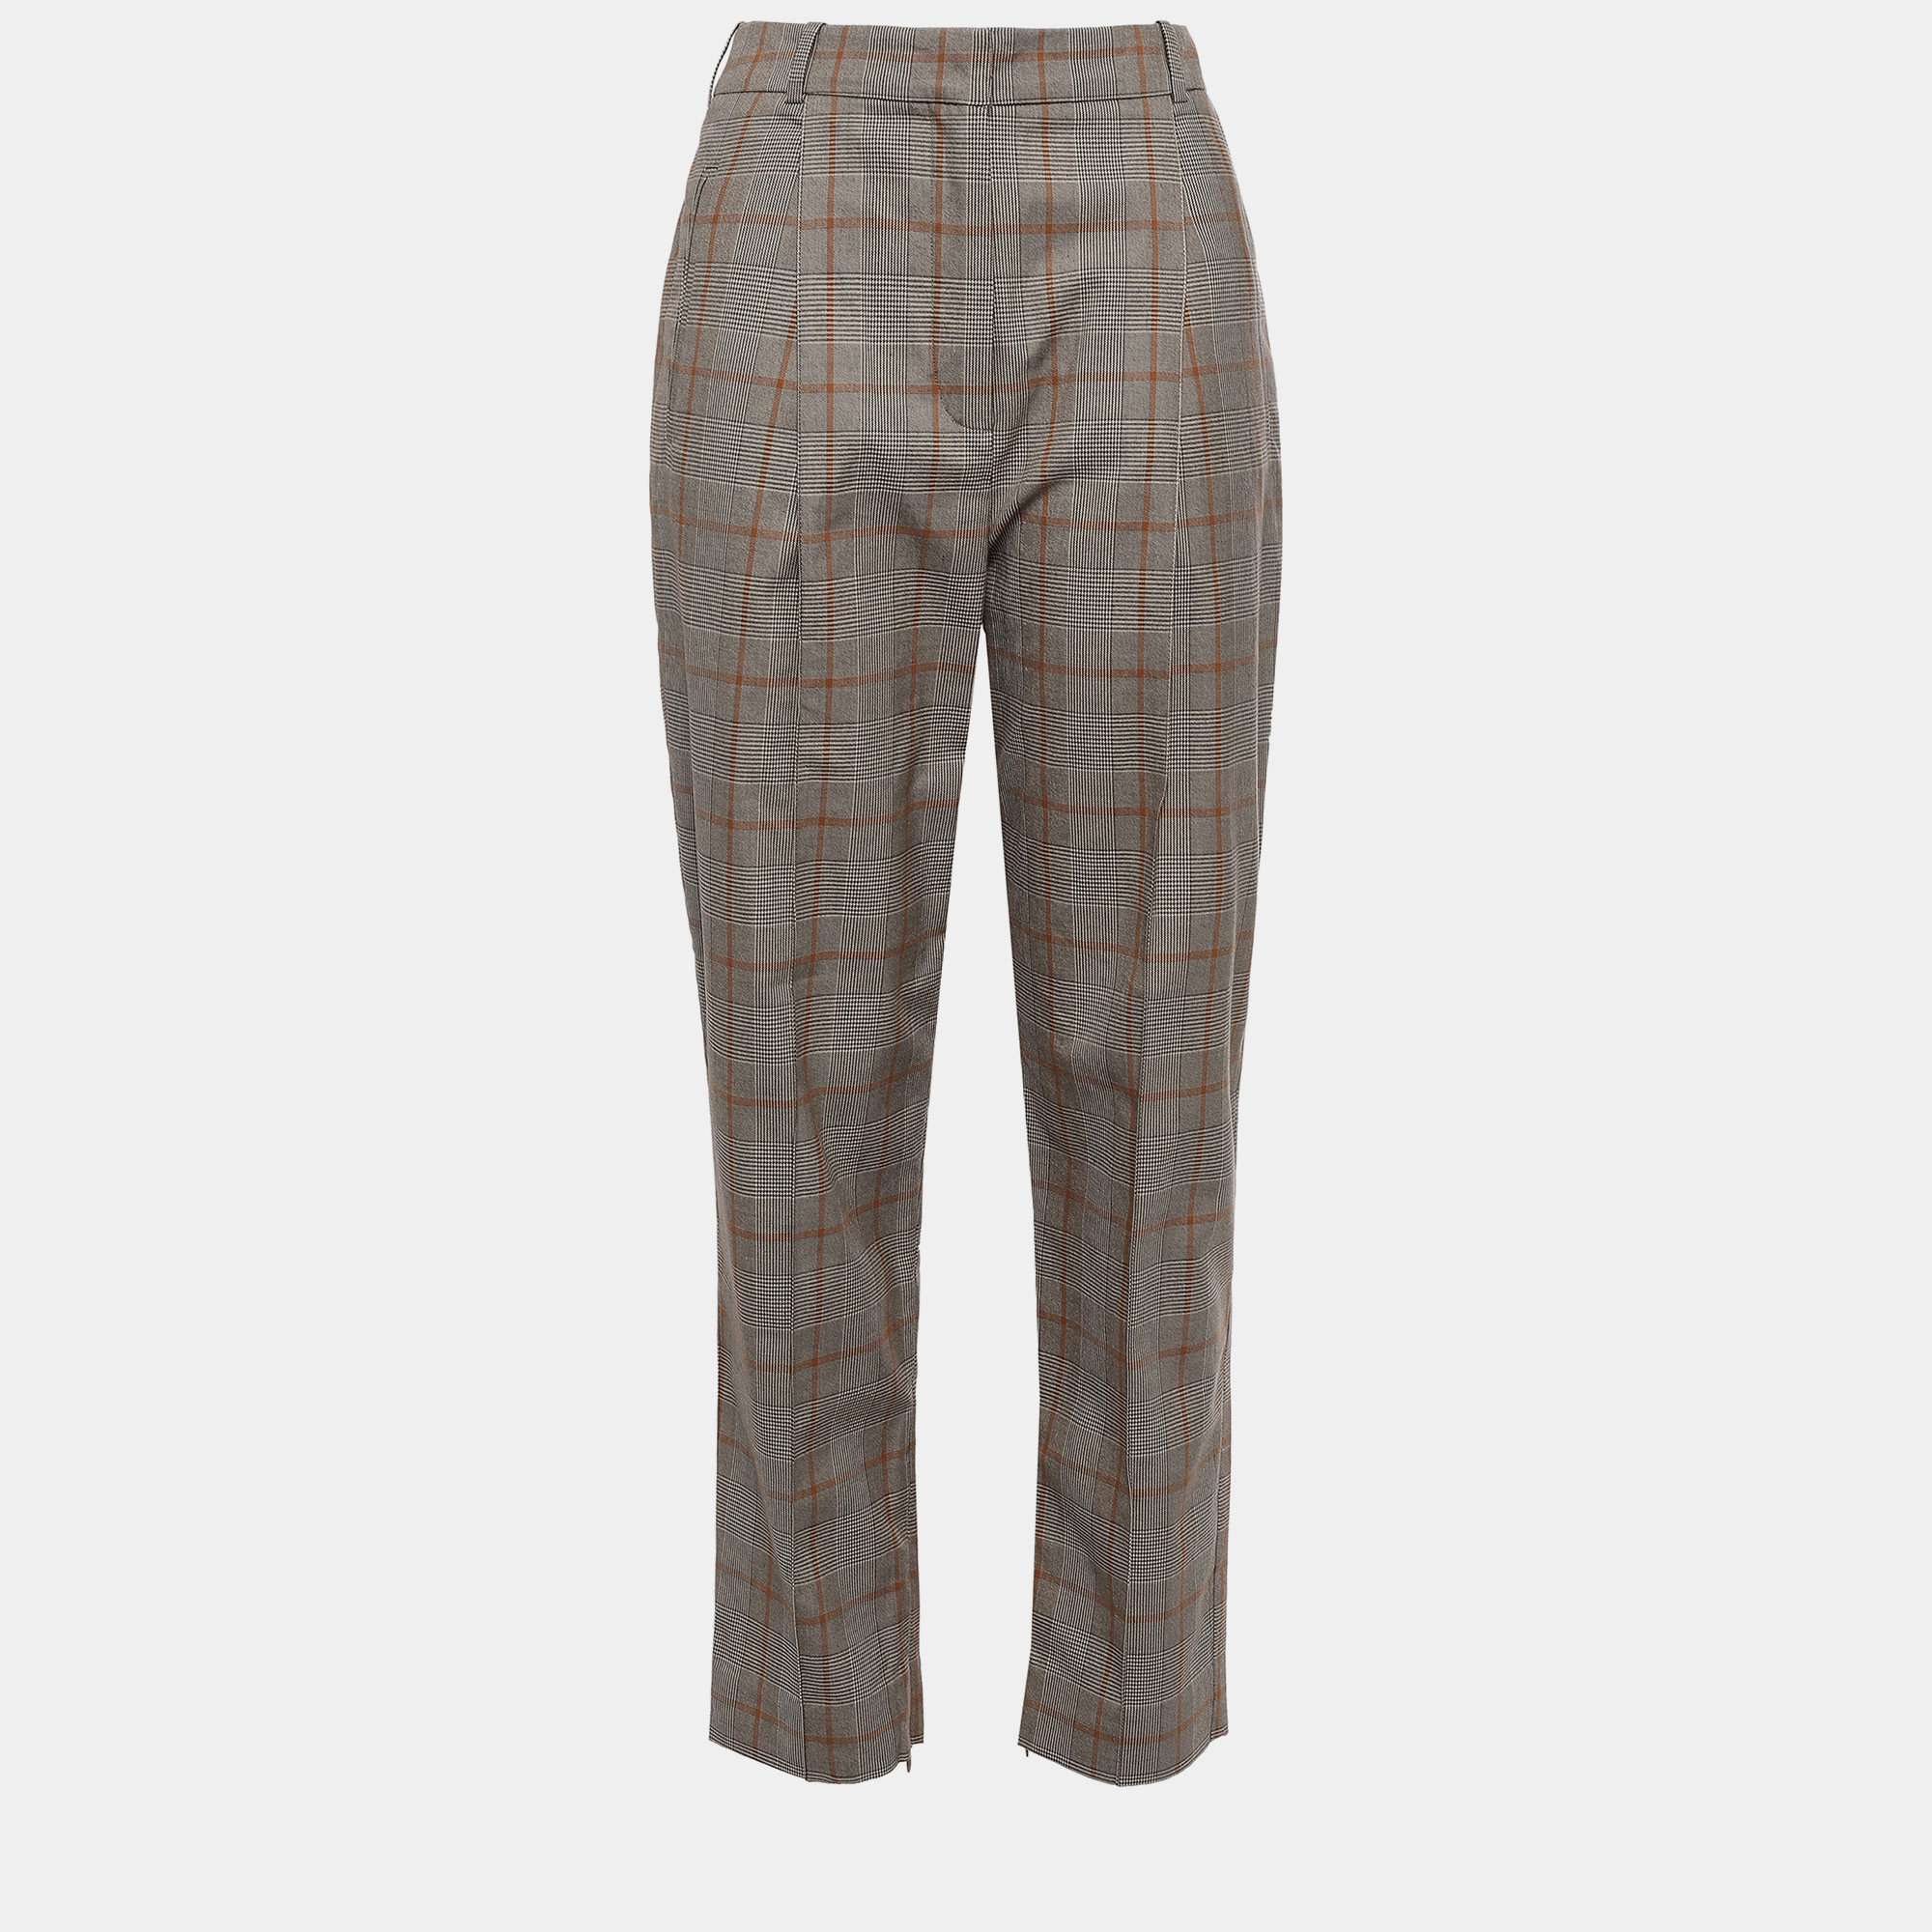 Zimmermann brown check trousers size m (2)